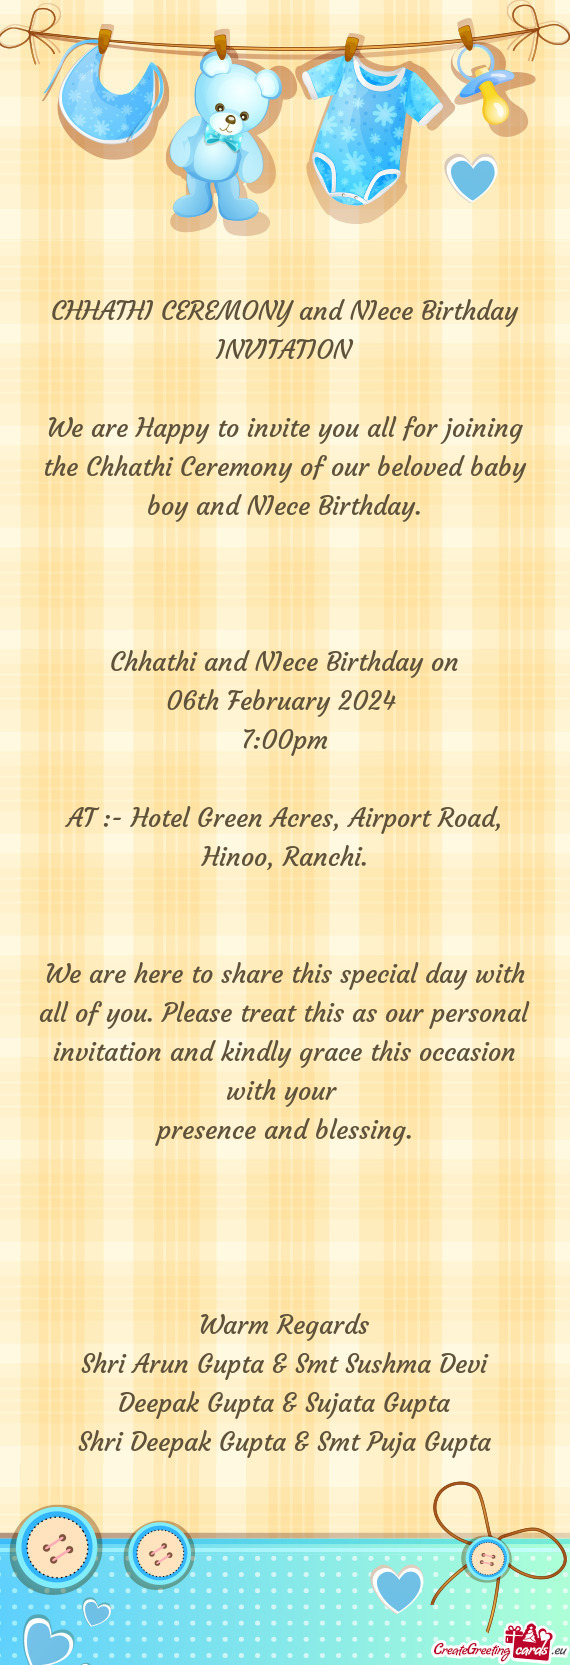 Chhathi and NIece Birthday on